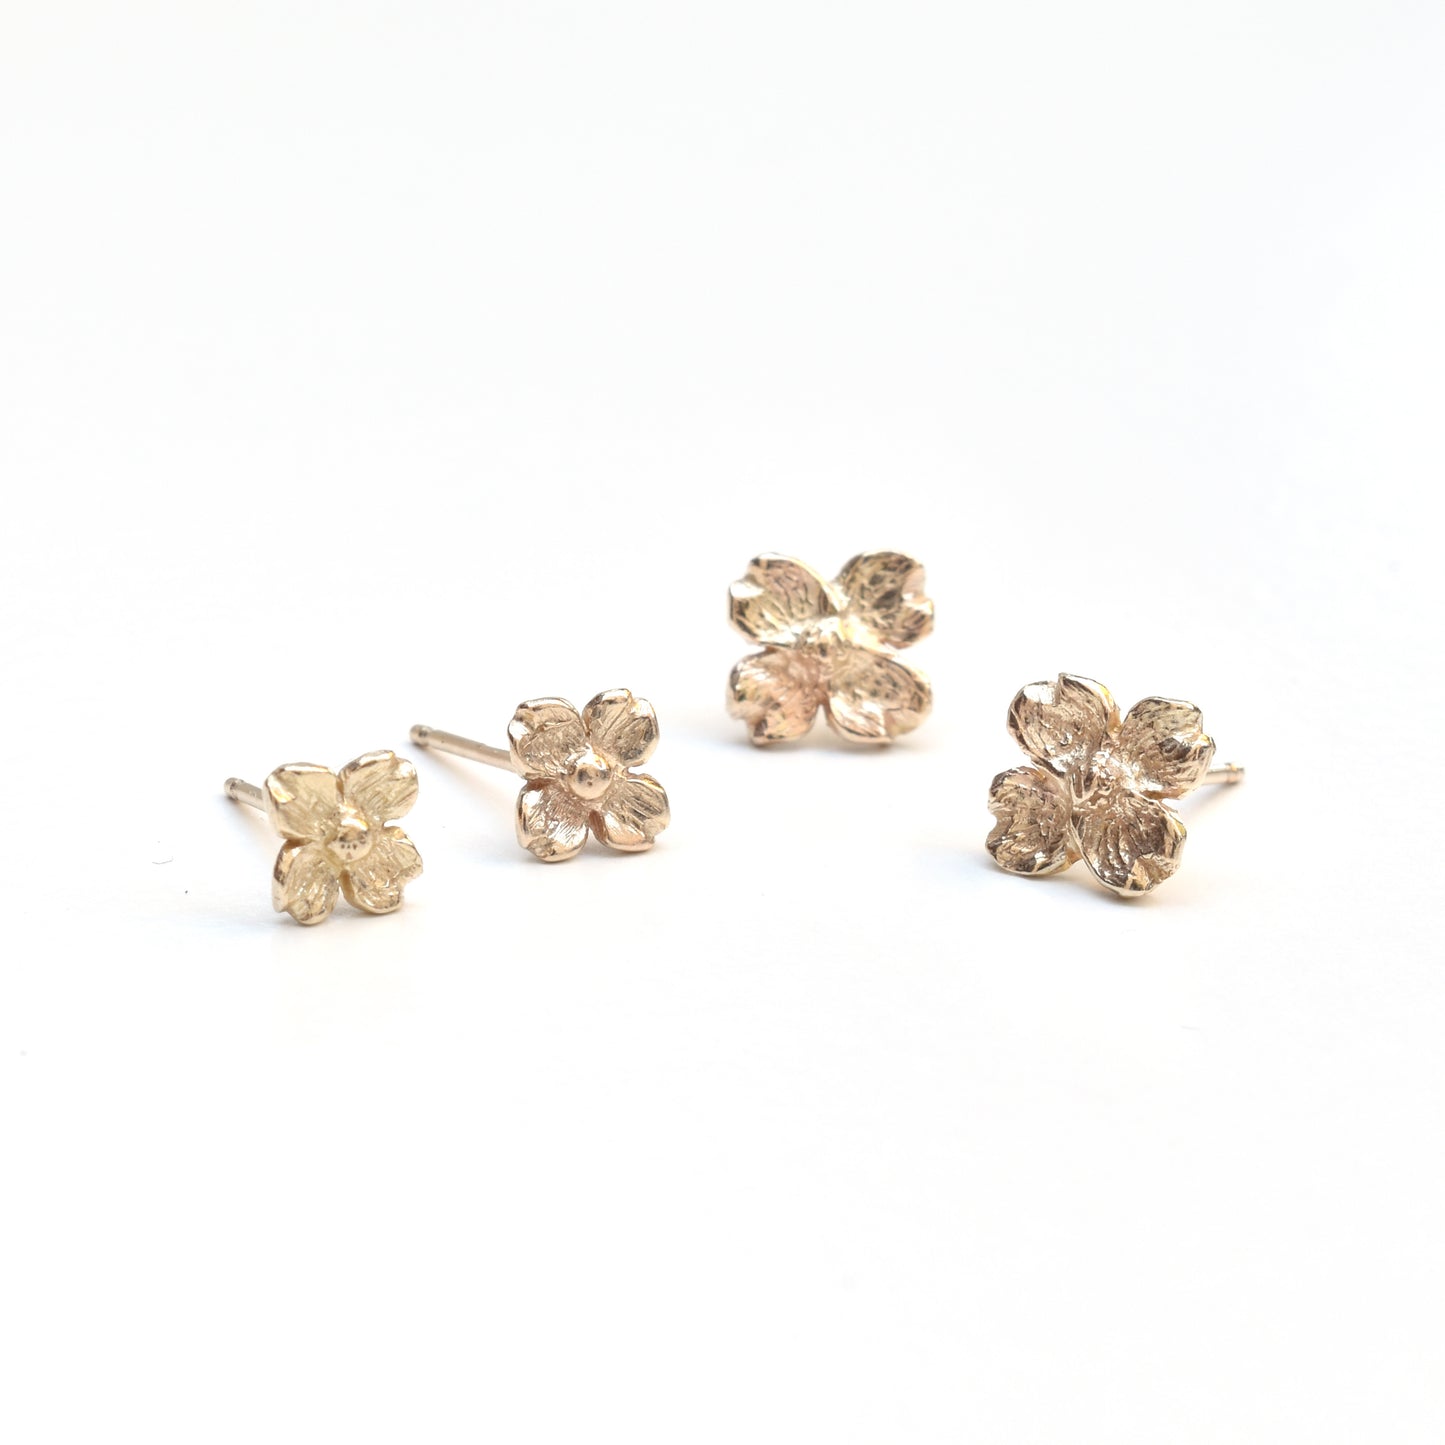 Dogwood Blossom Earrings, medium